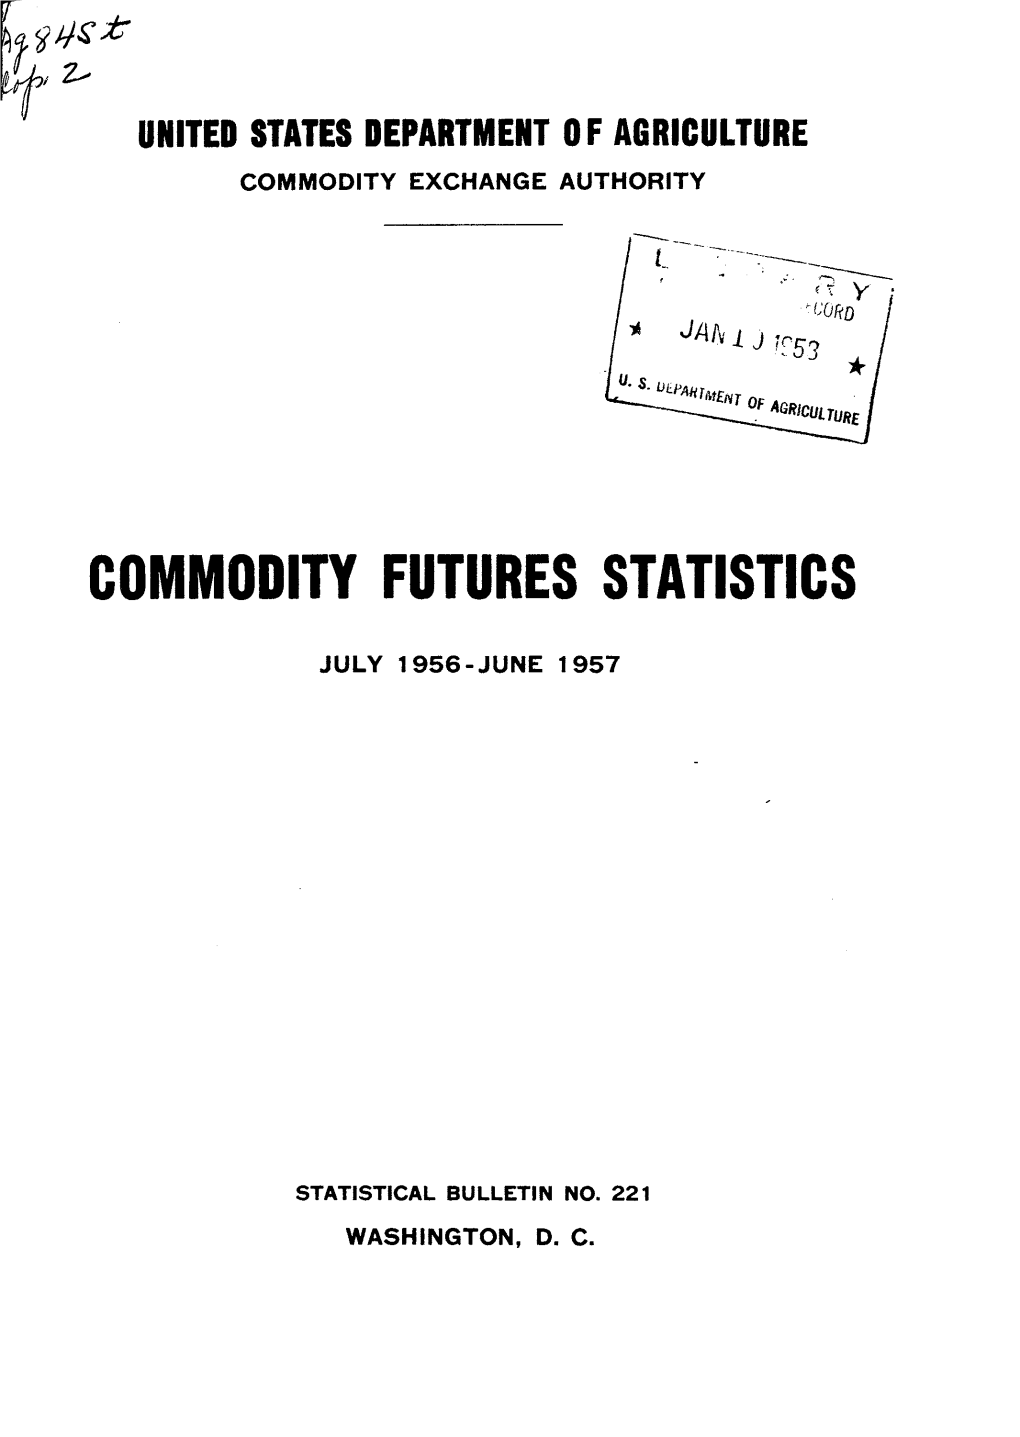 Commodity Futures Statistics